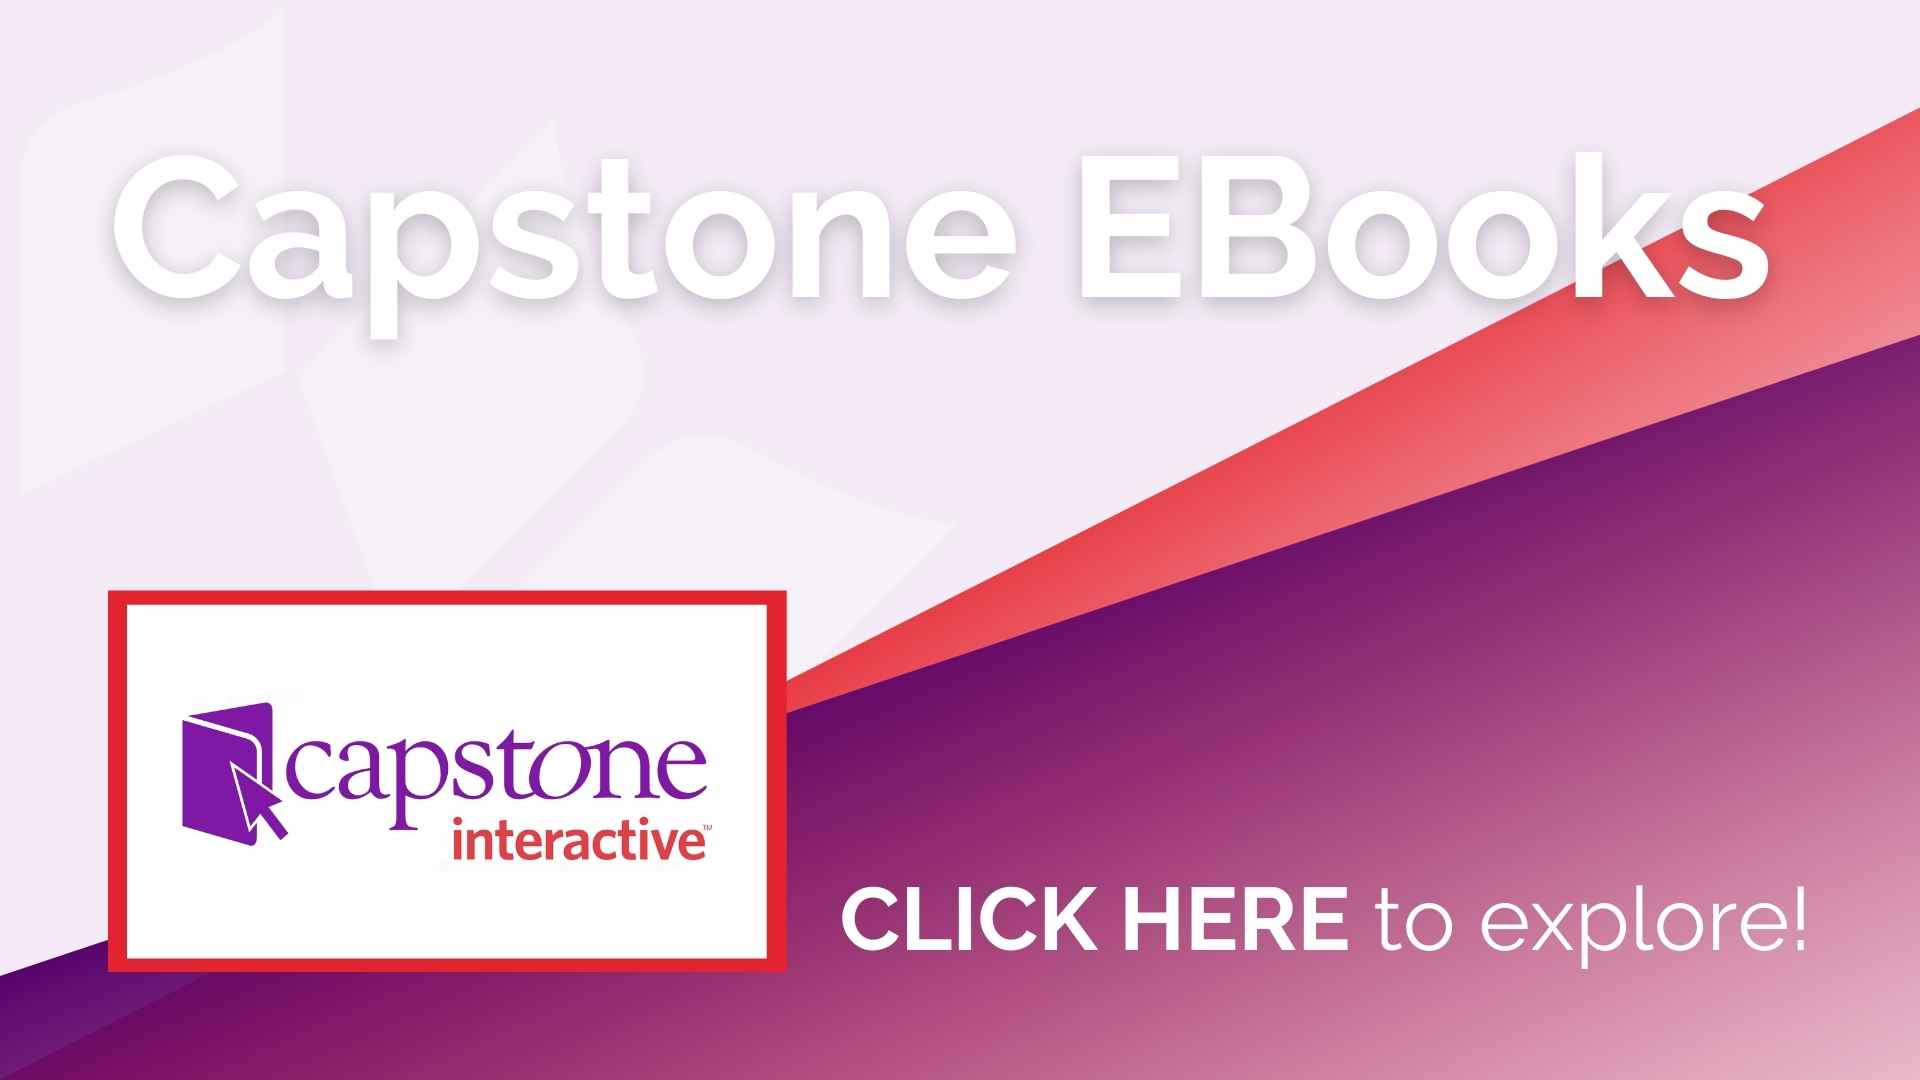 Capstone Ebooks